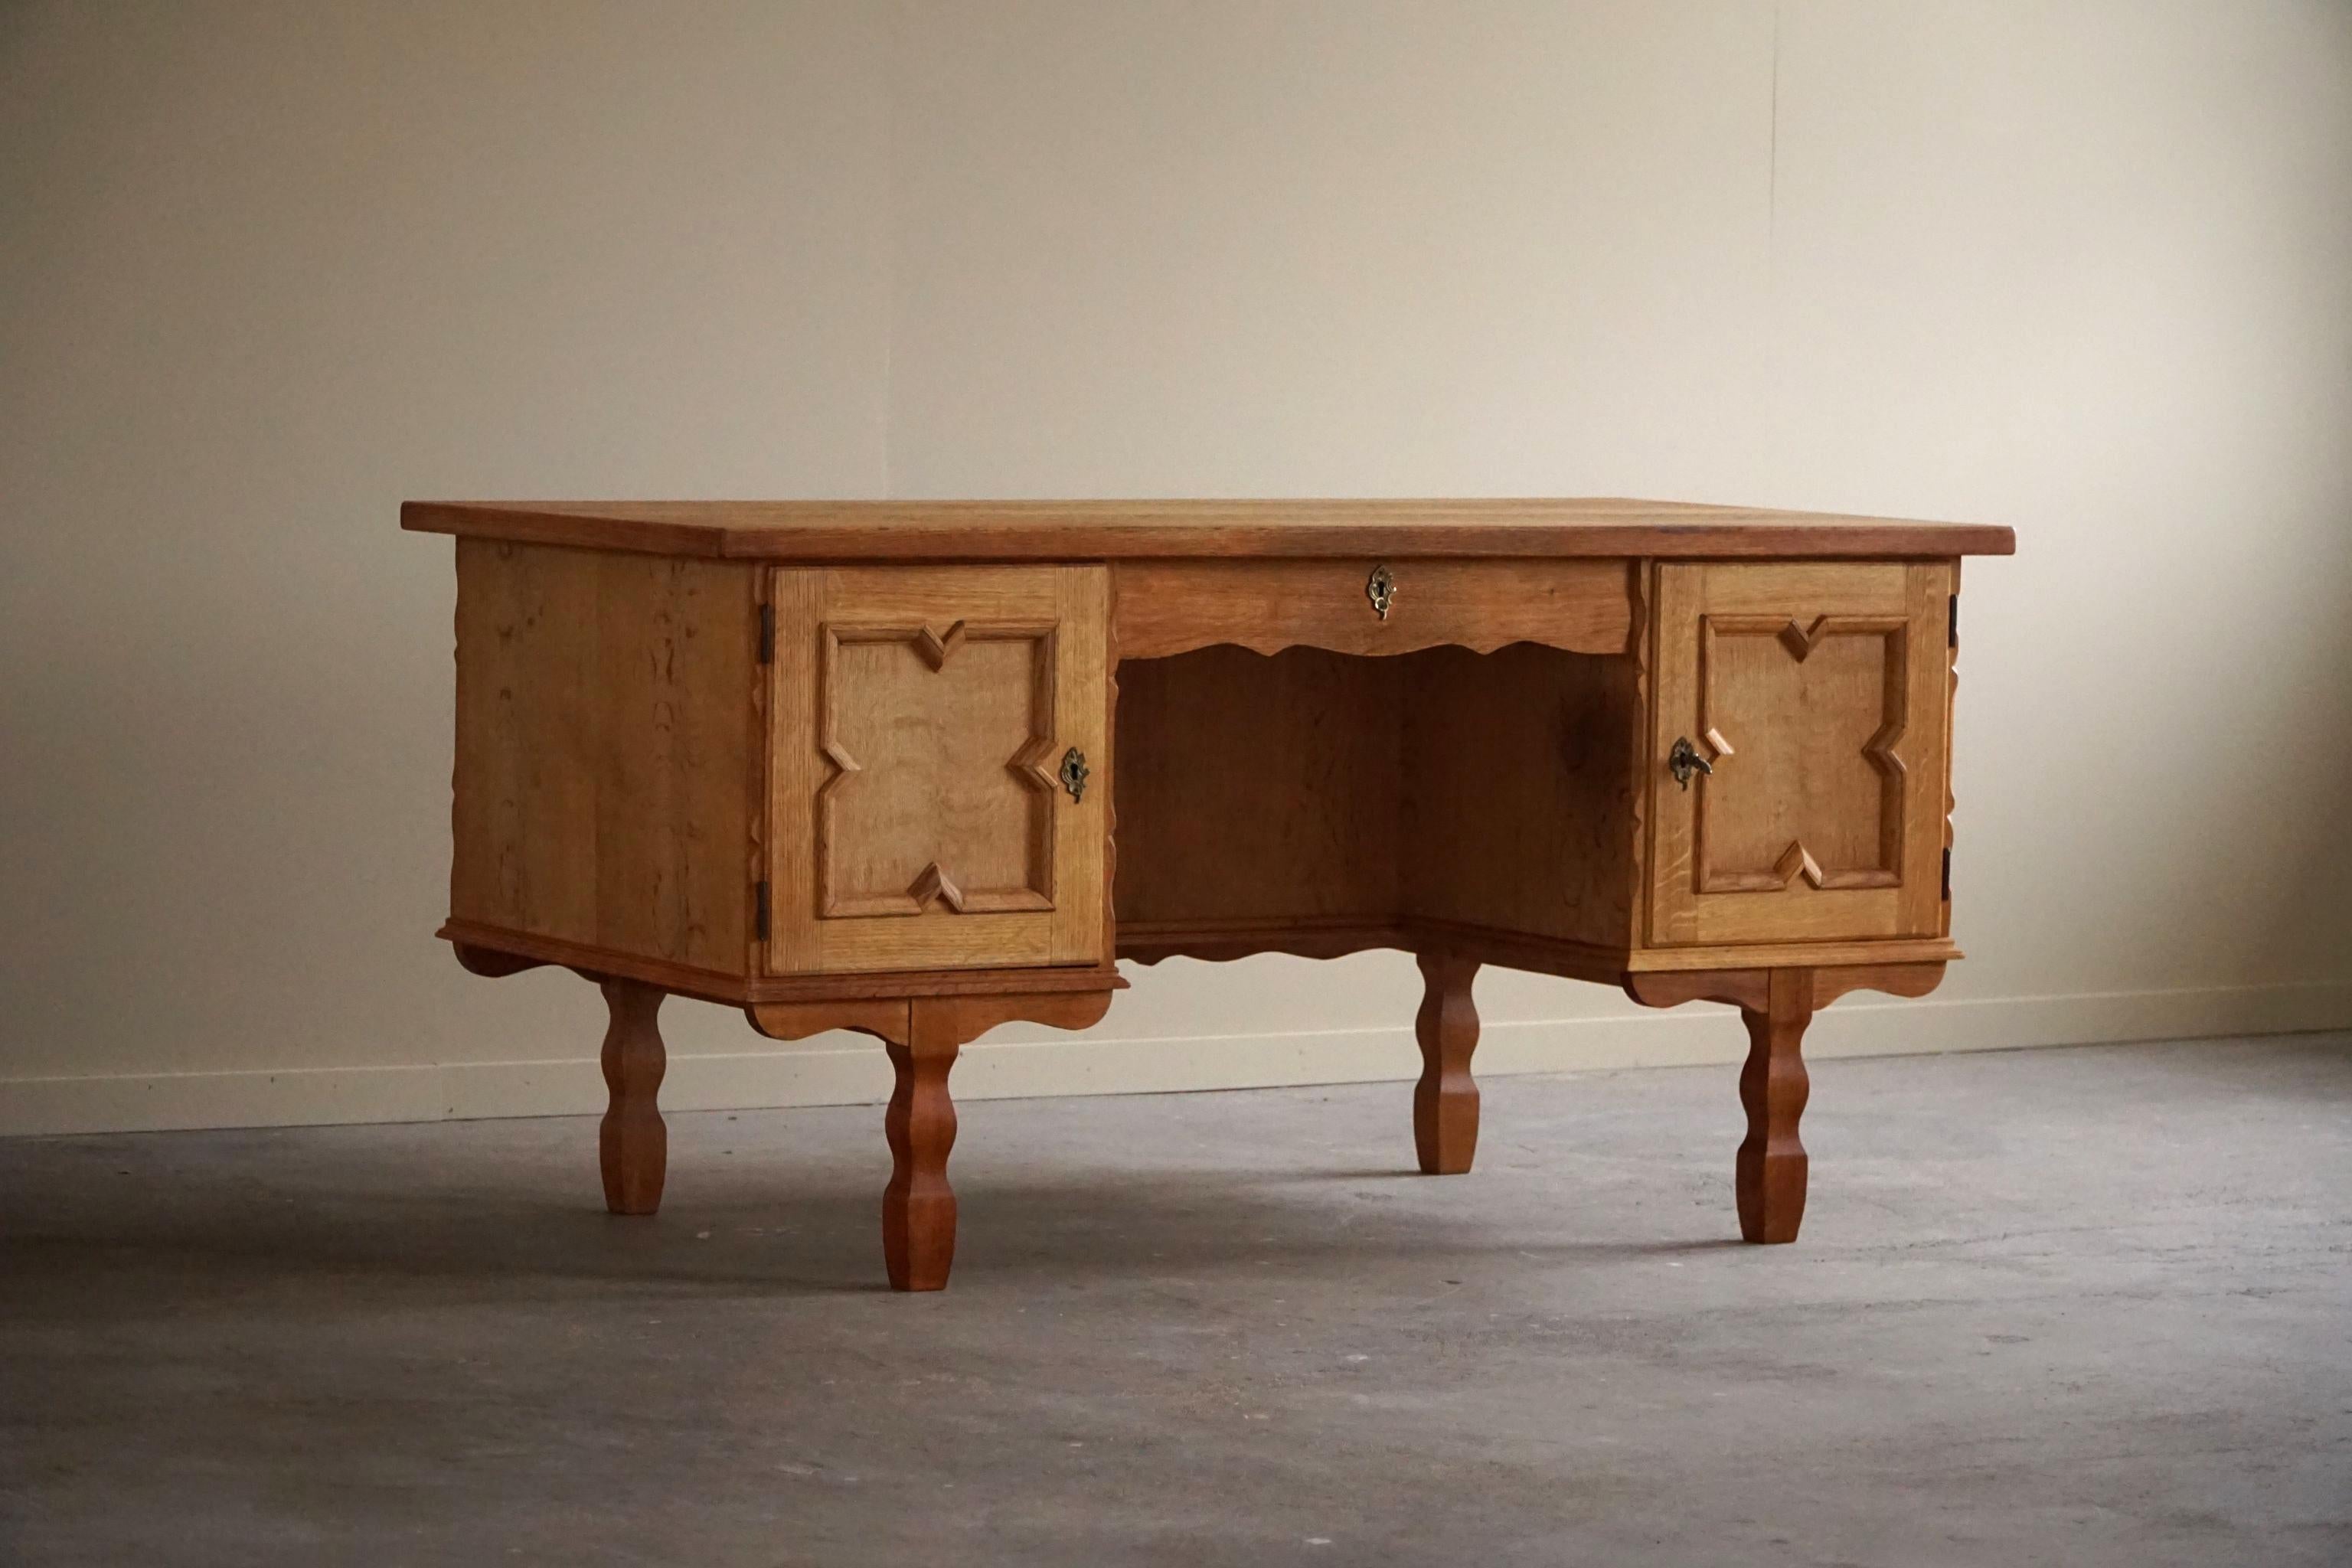 20th Century Midcentury Freestanding Desk in Oak, Made by a Danish Cabinetmaker, 1950s